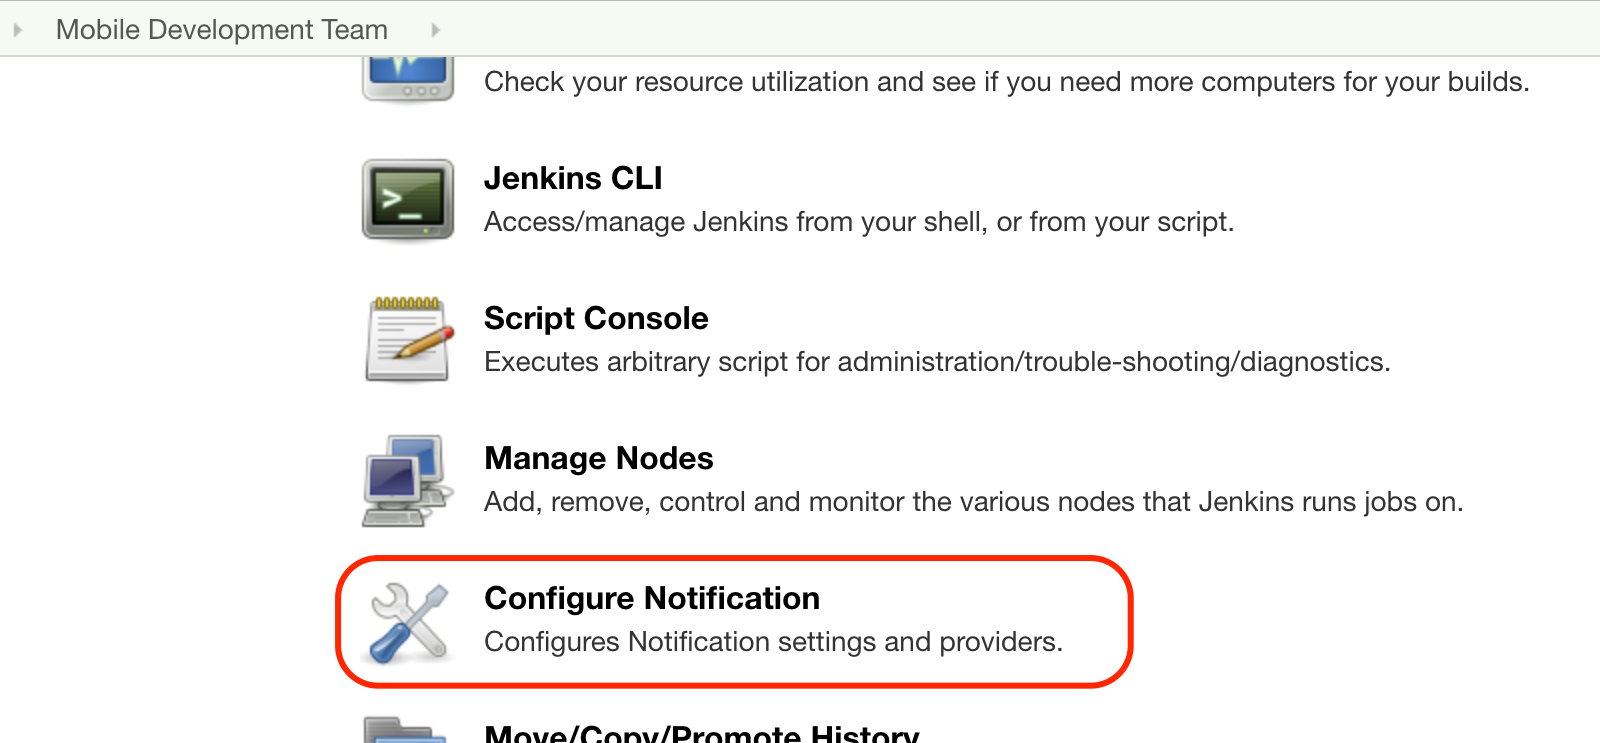 Configure Notification